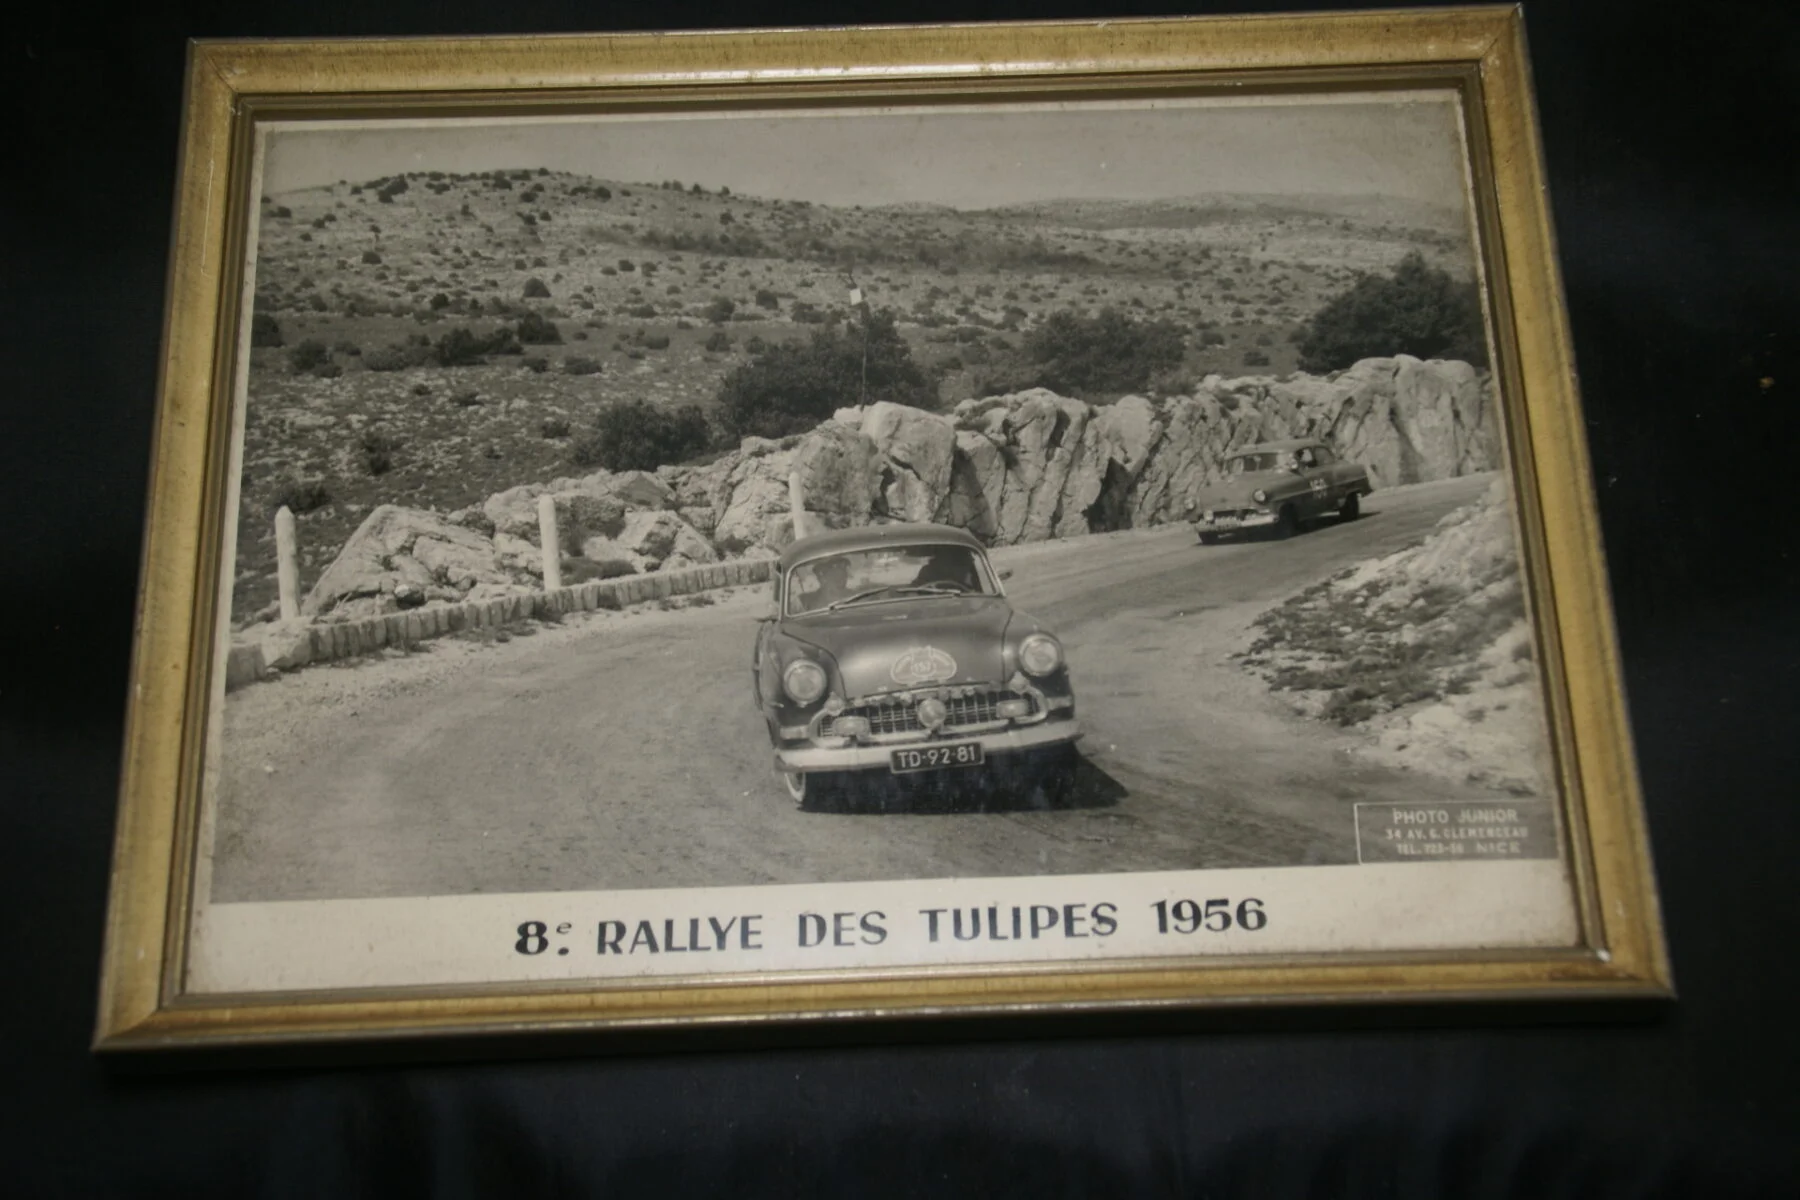 DSC01182 foto ingelijst Tulpenrally 1956 met Opel Rekord nr 157